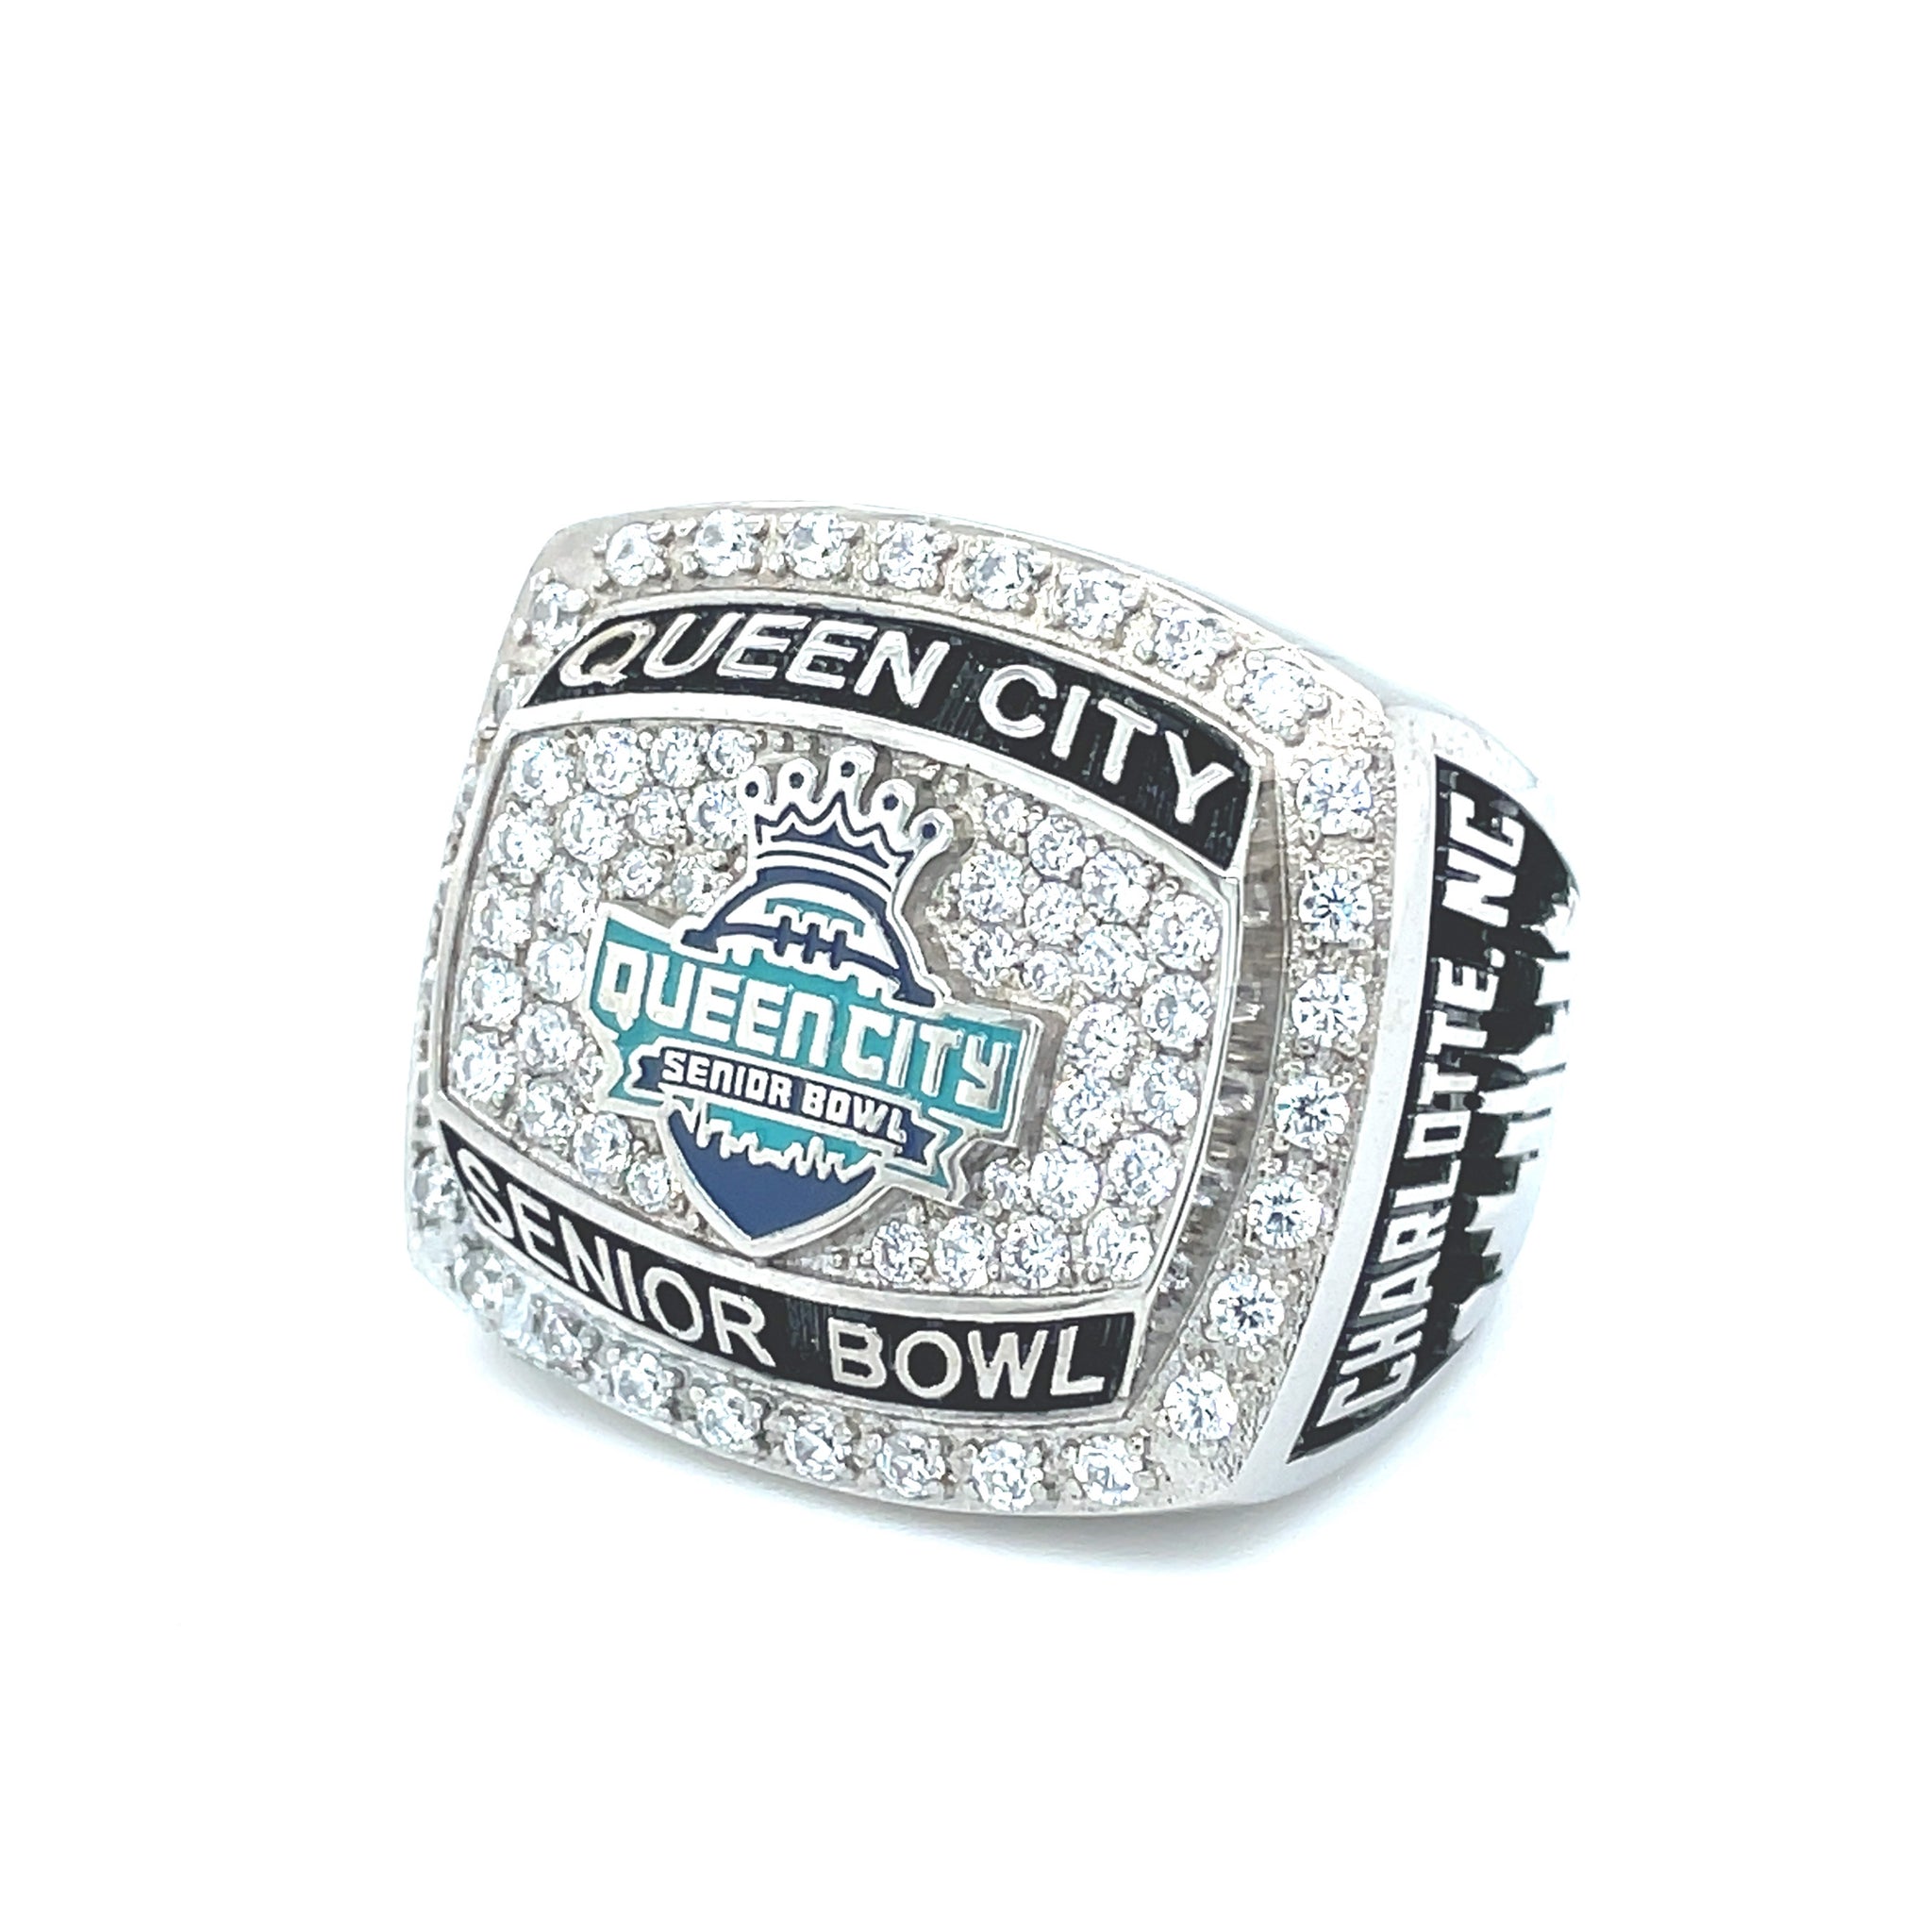 Queen City Senior Bowl - Championship Ring